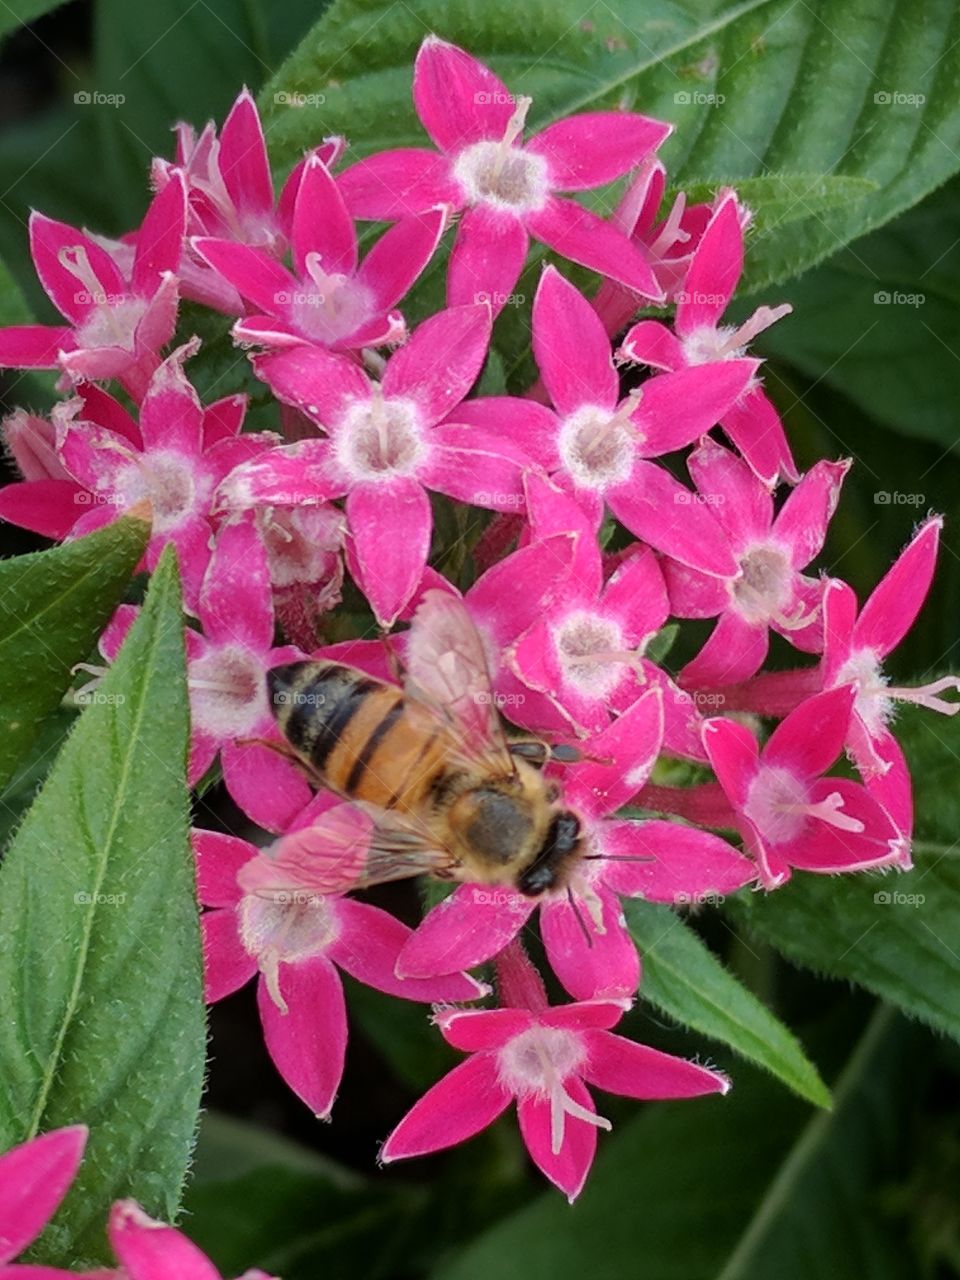 pentas being pollinated